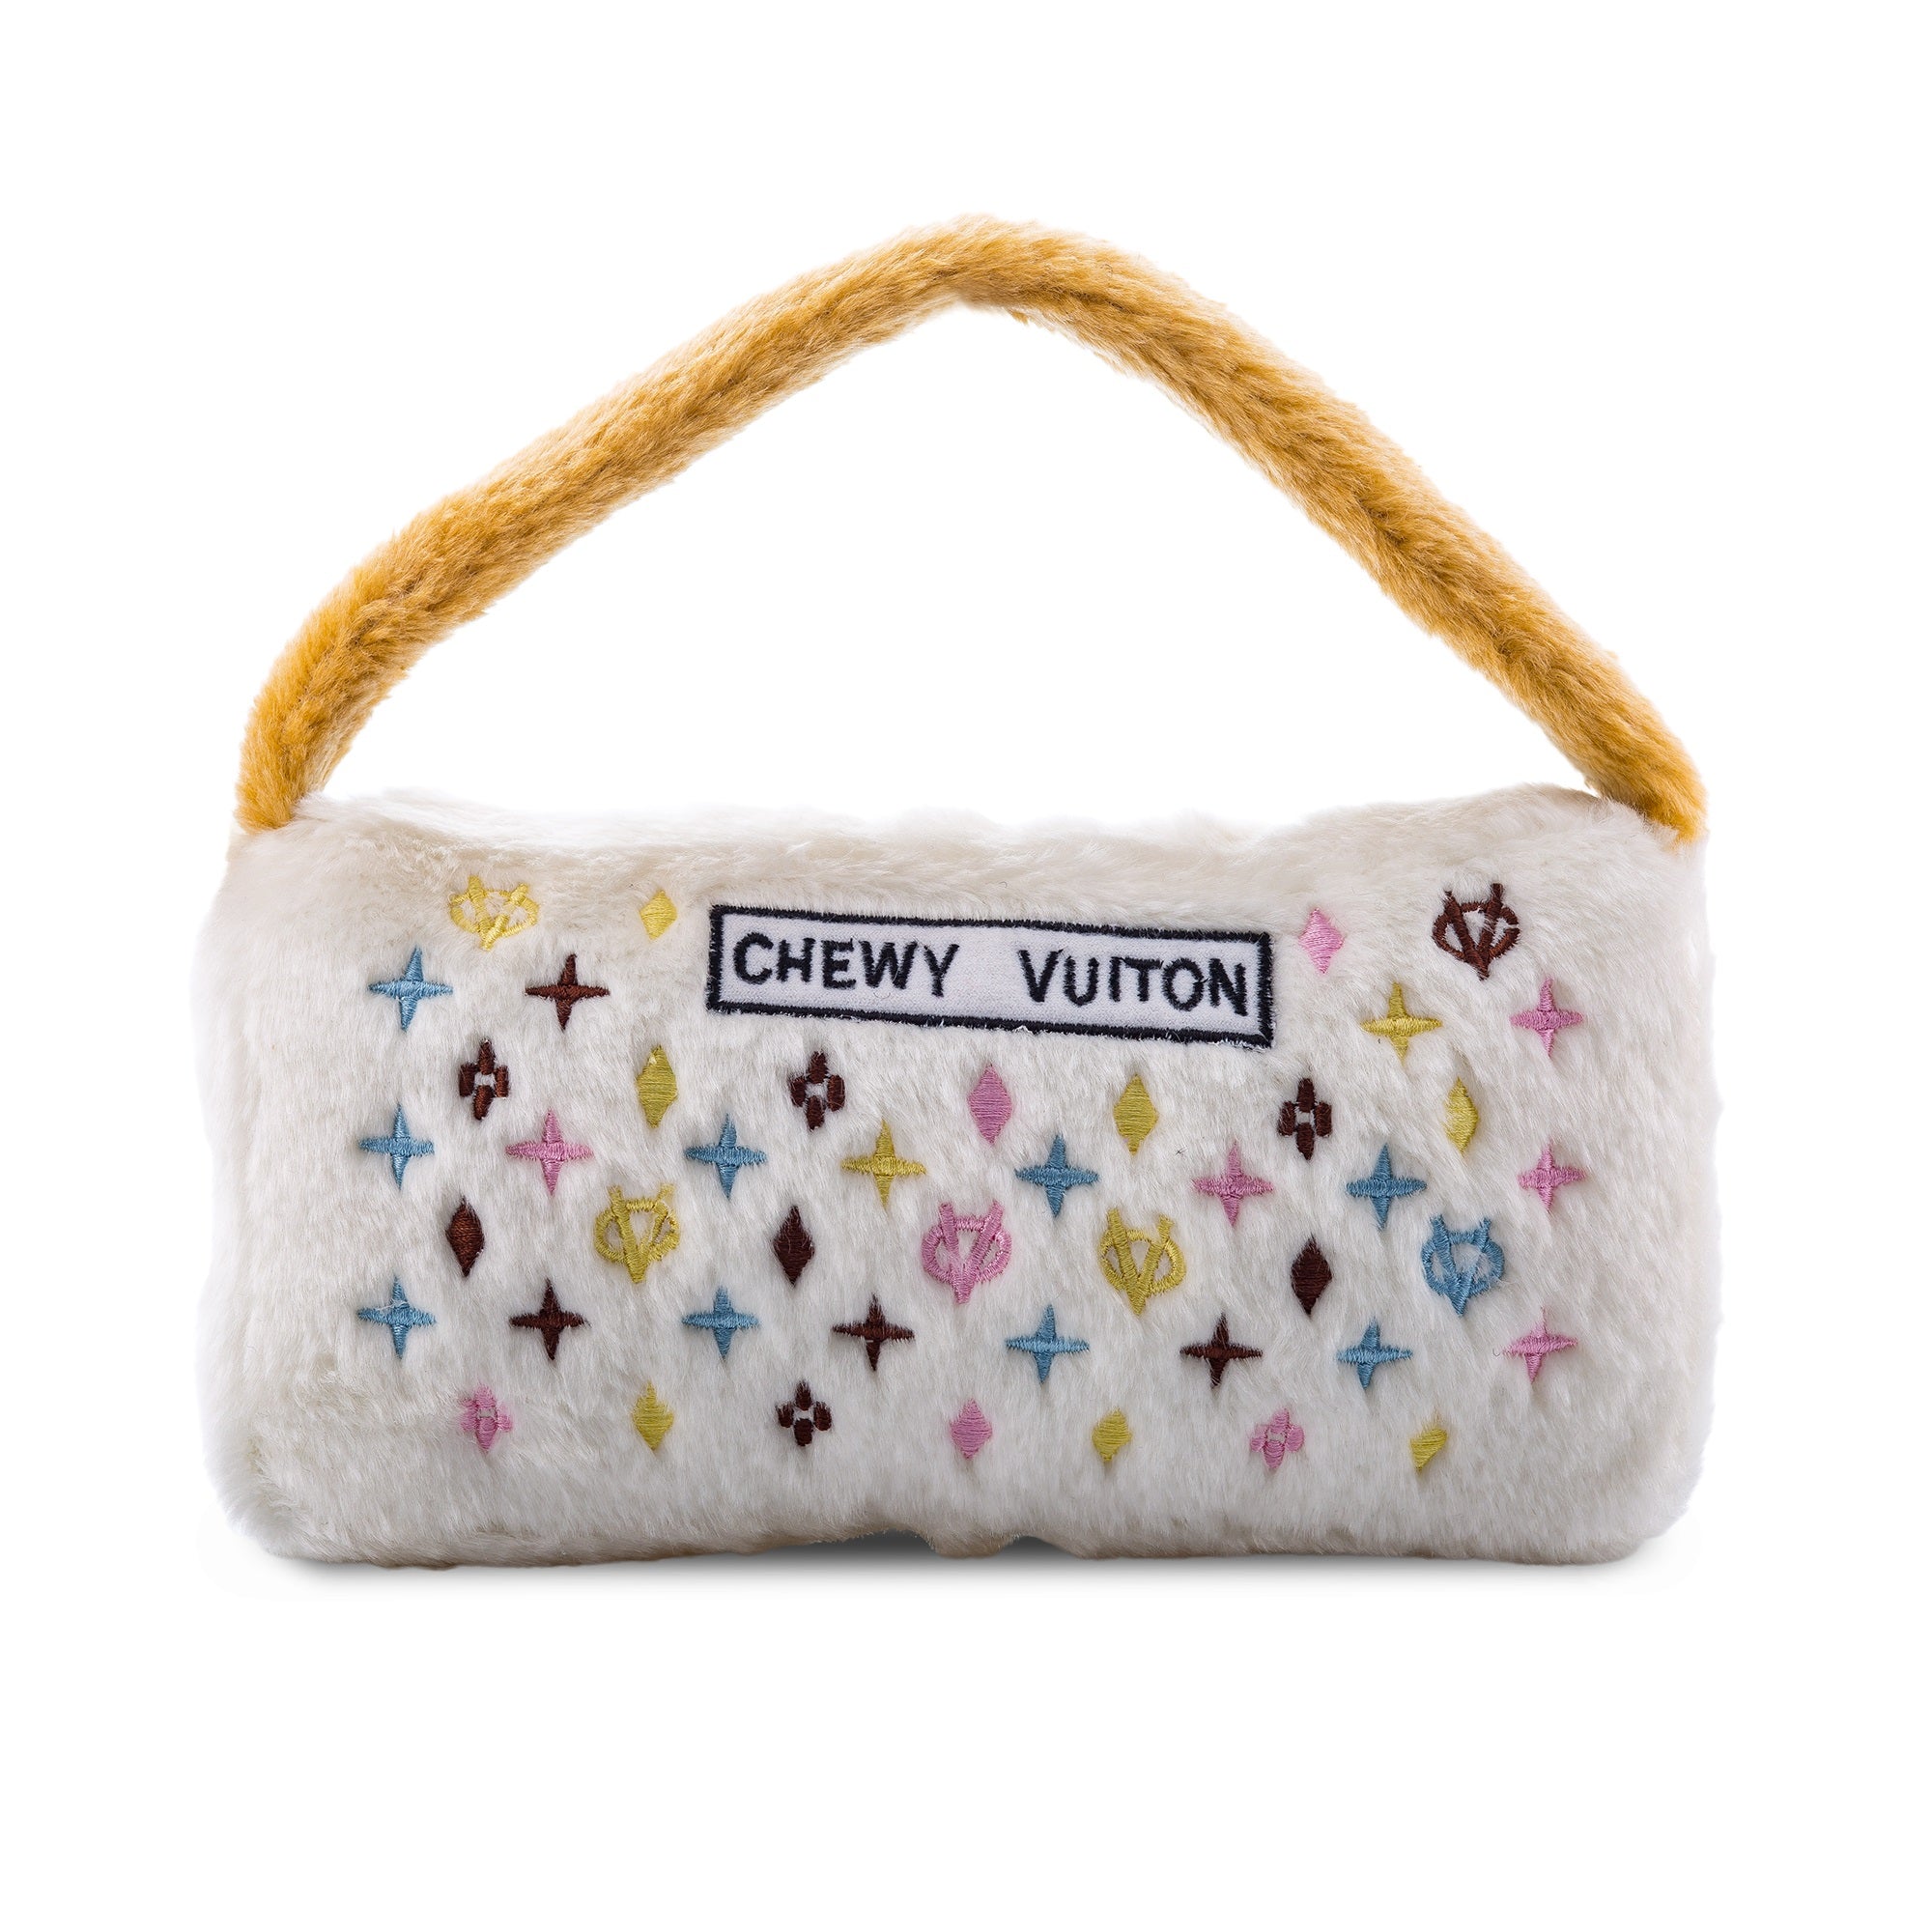 Chewy Vuiton Handbag Toy Purse Dog